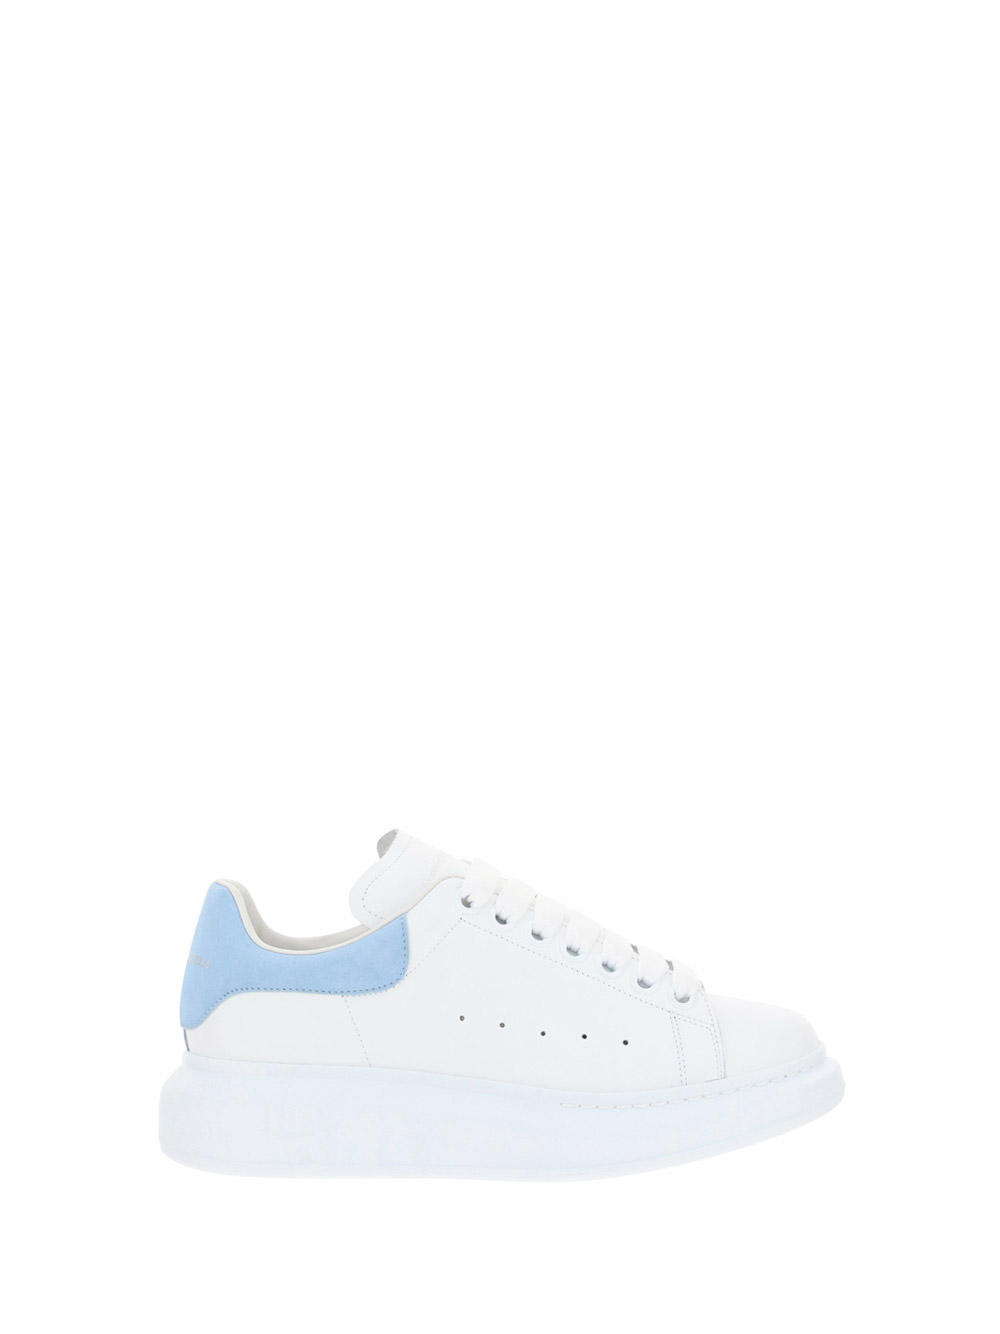 Alexander Mcqueen Sneakers In White/powder Blue